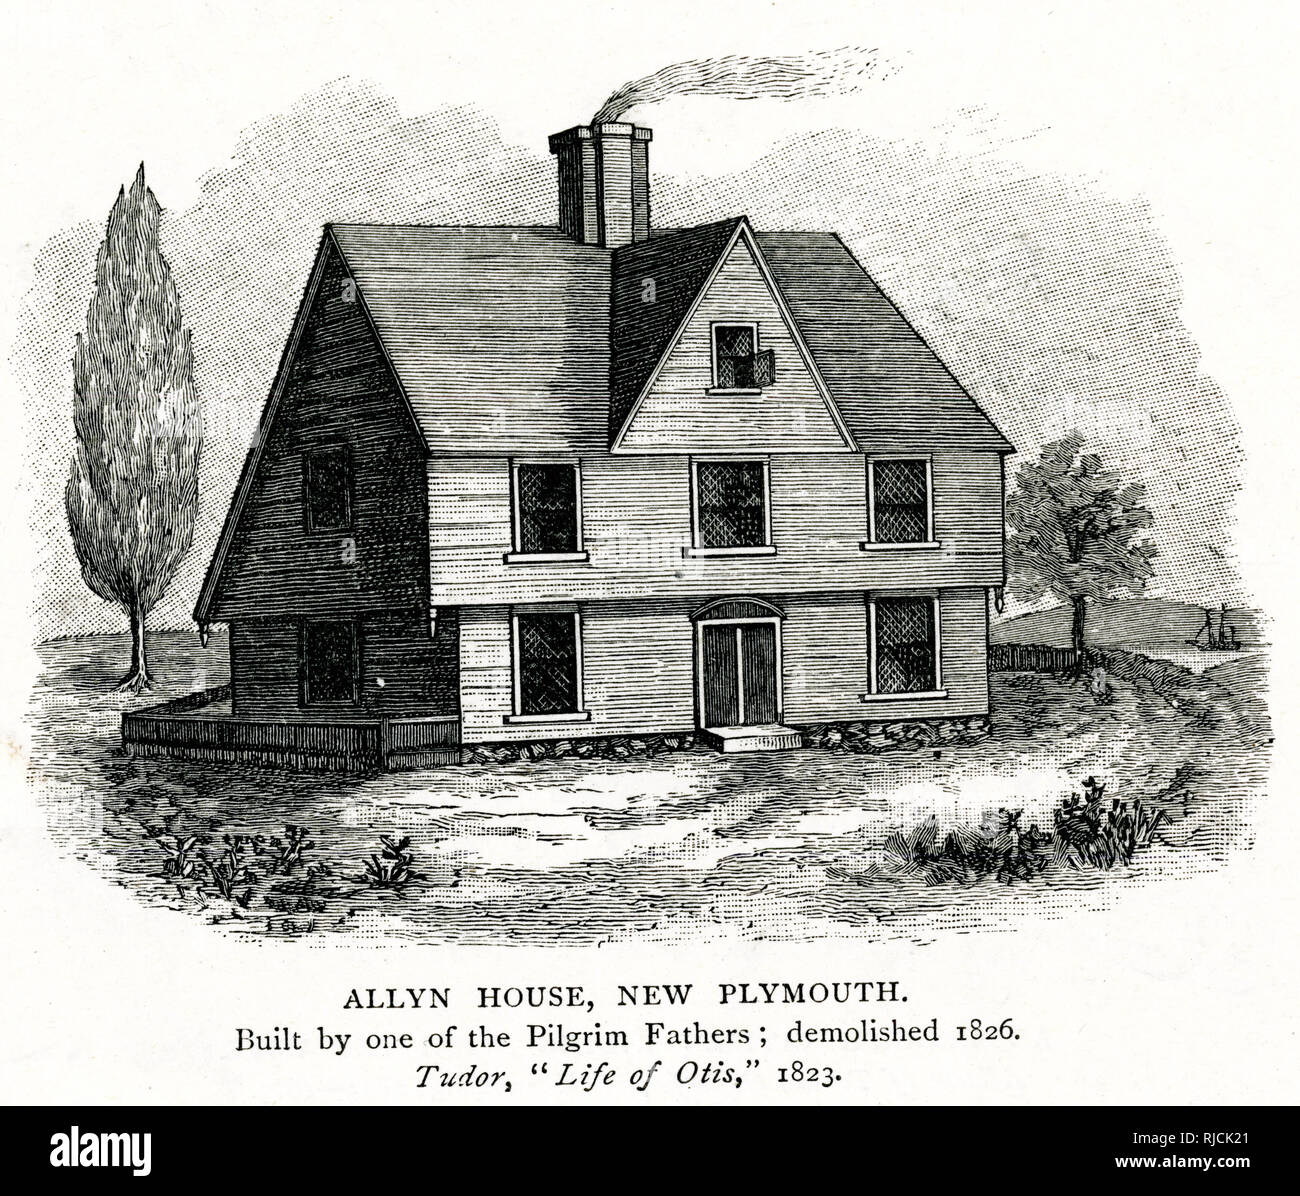 Allyn House, New Plymouth, Pilgram's house 1621 Stock Photo